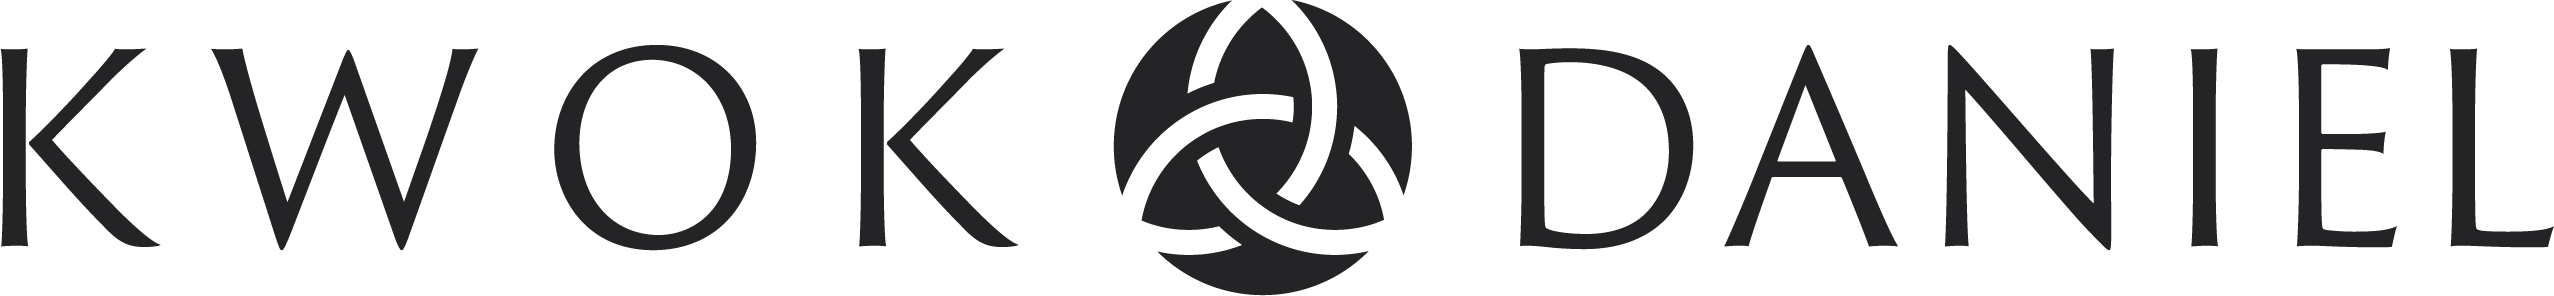 Kwok Daniel Horizontal Alternate Black Logo